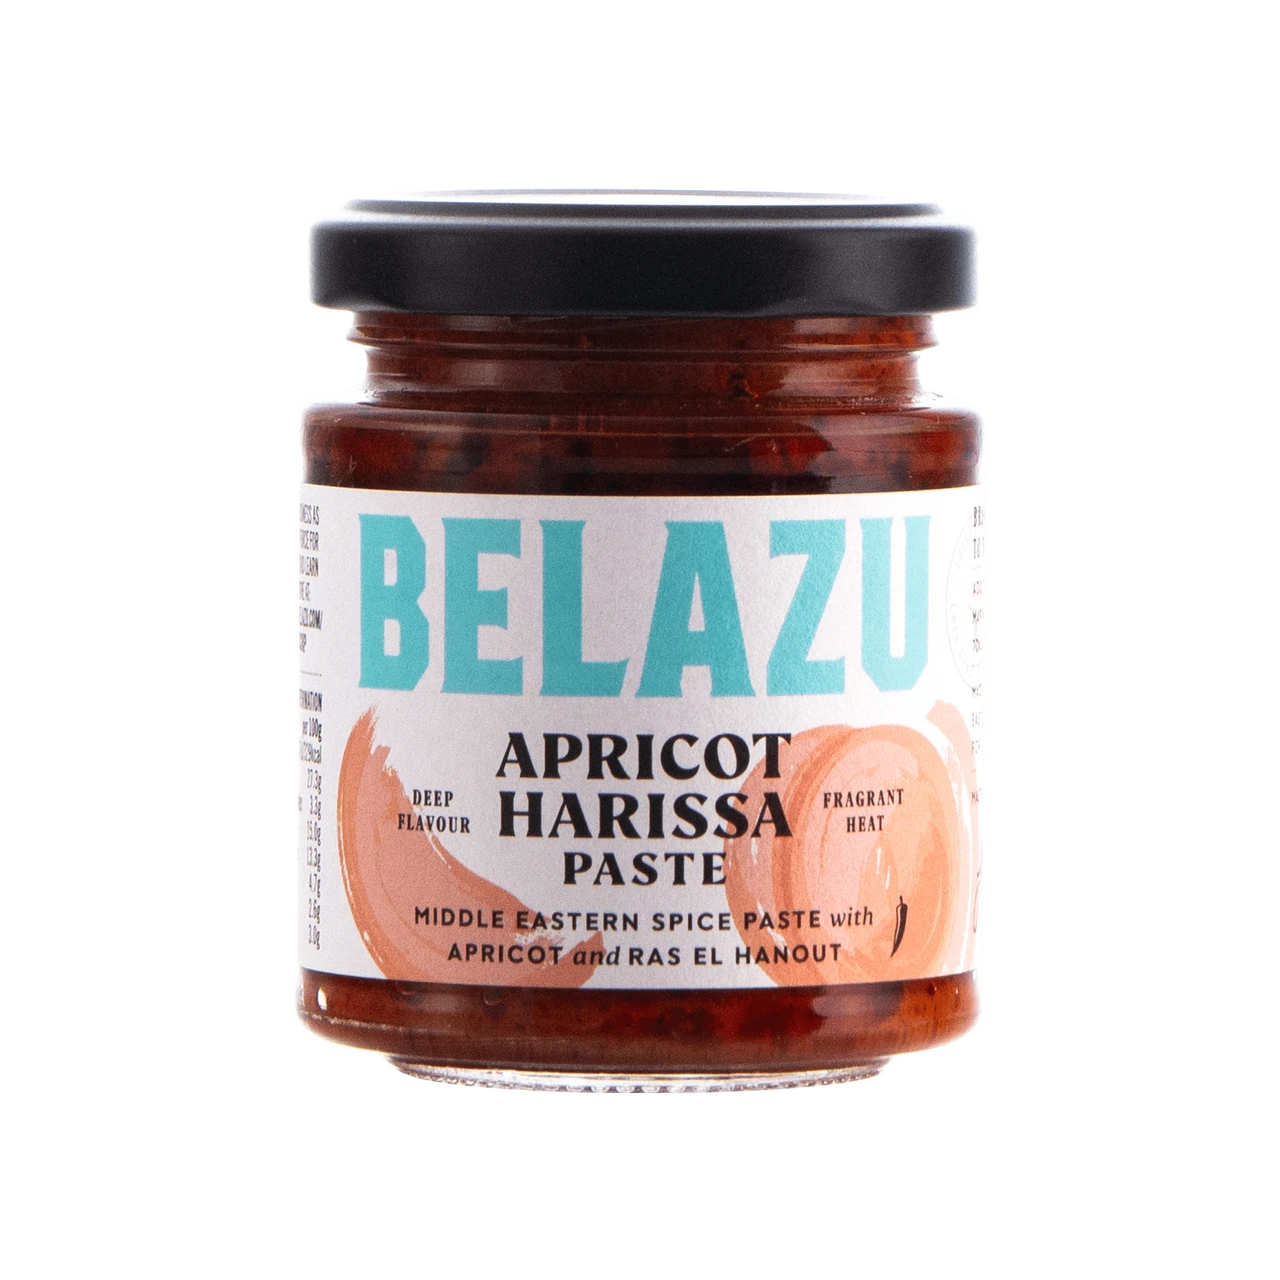 Belazu - Apricot Harissa - 170g - single